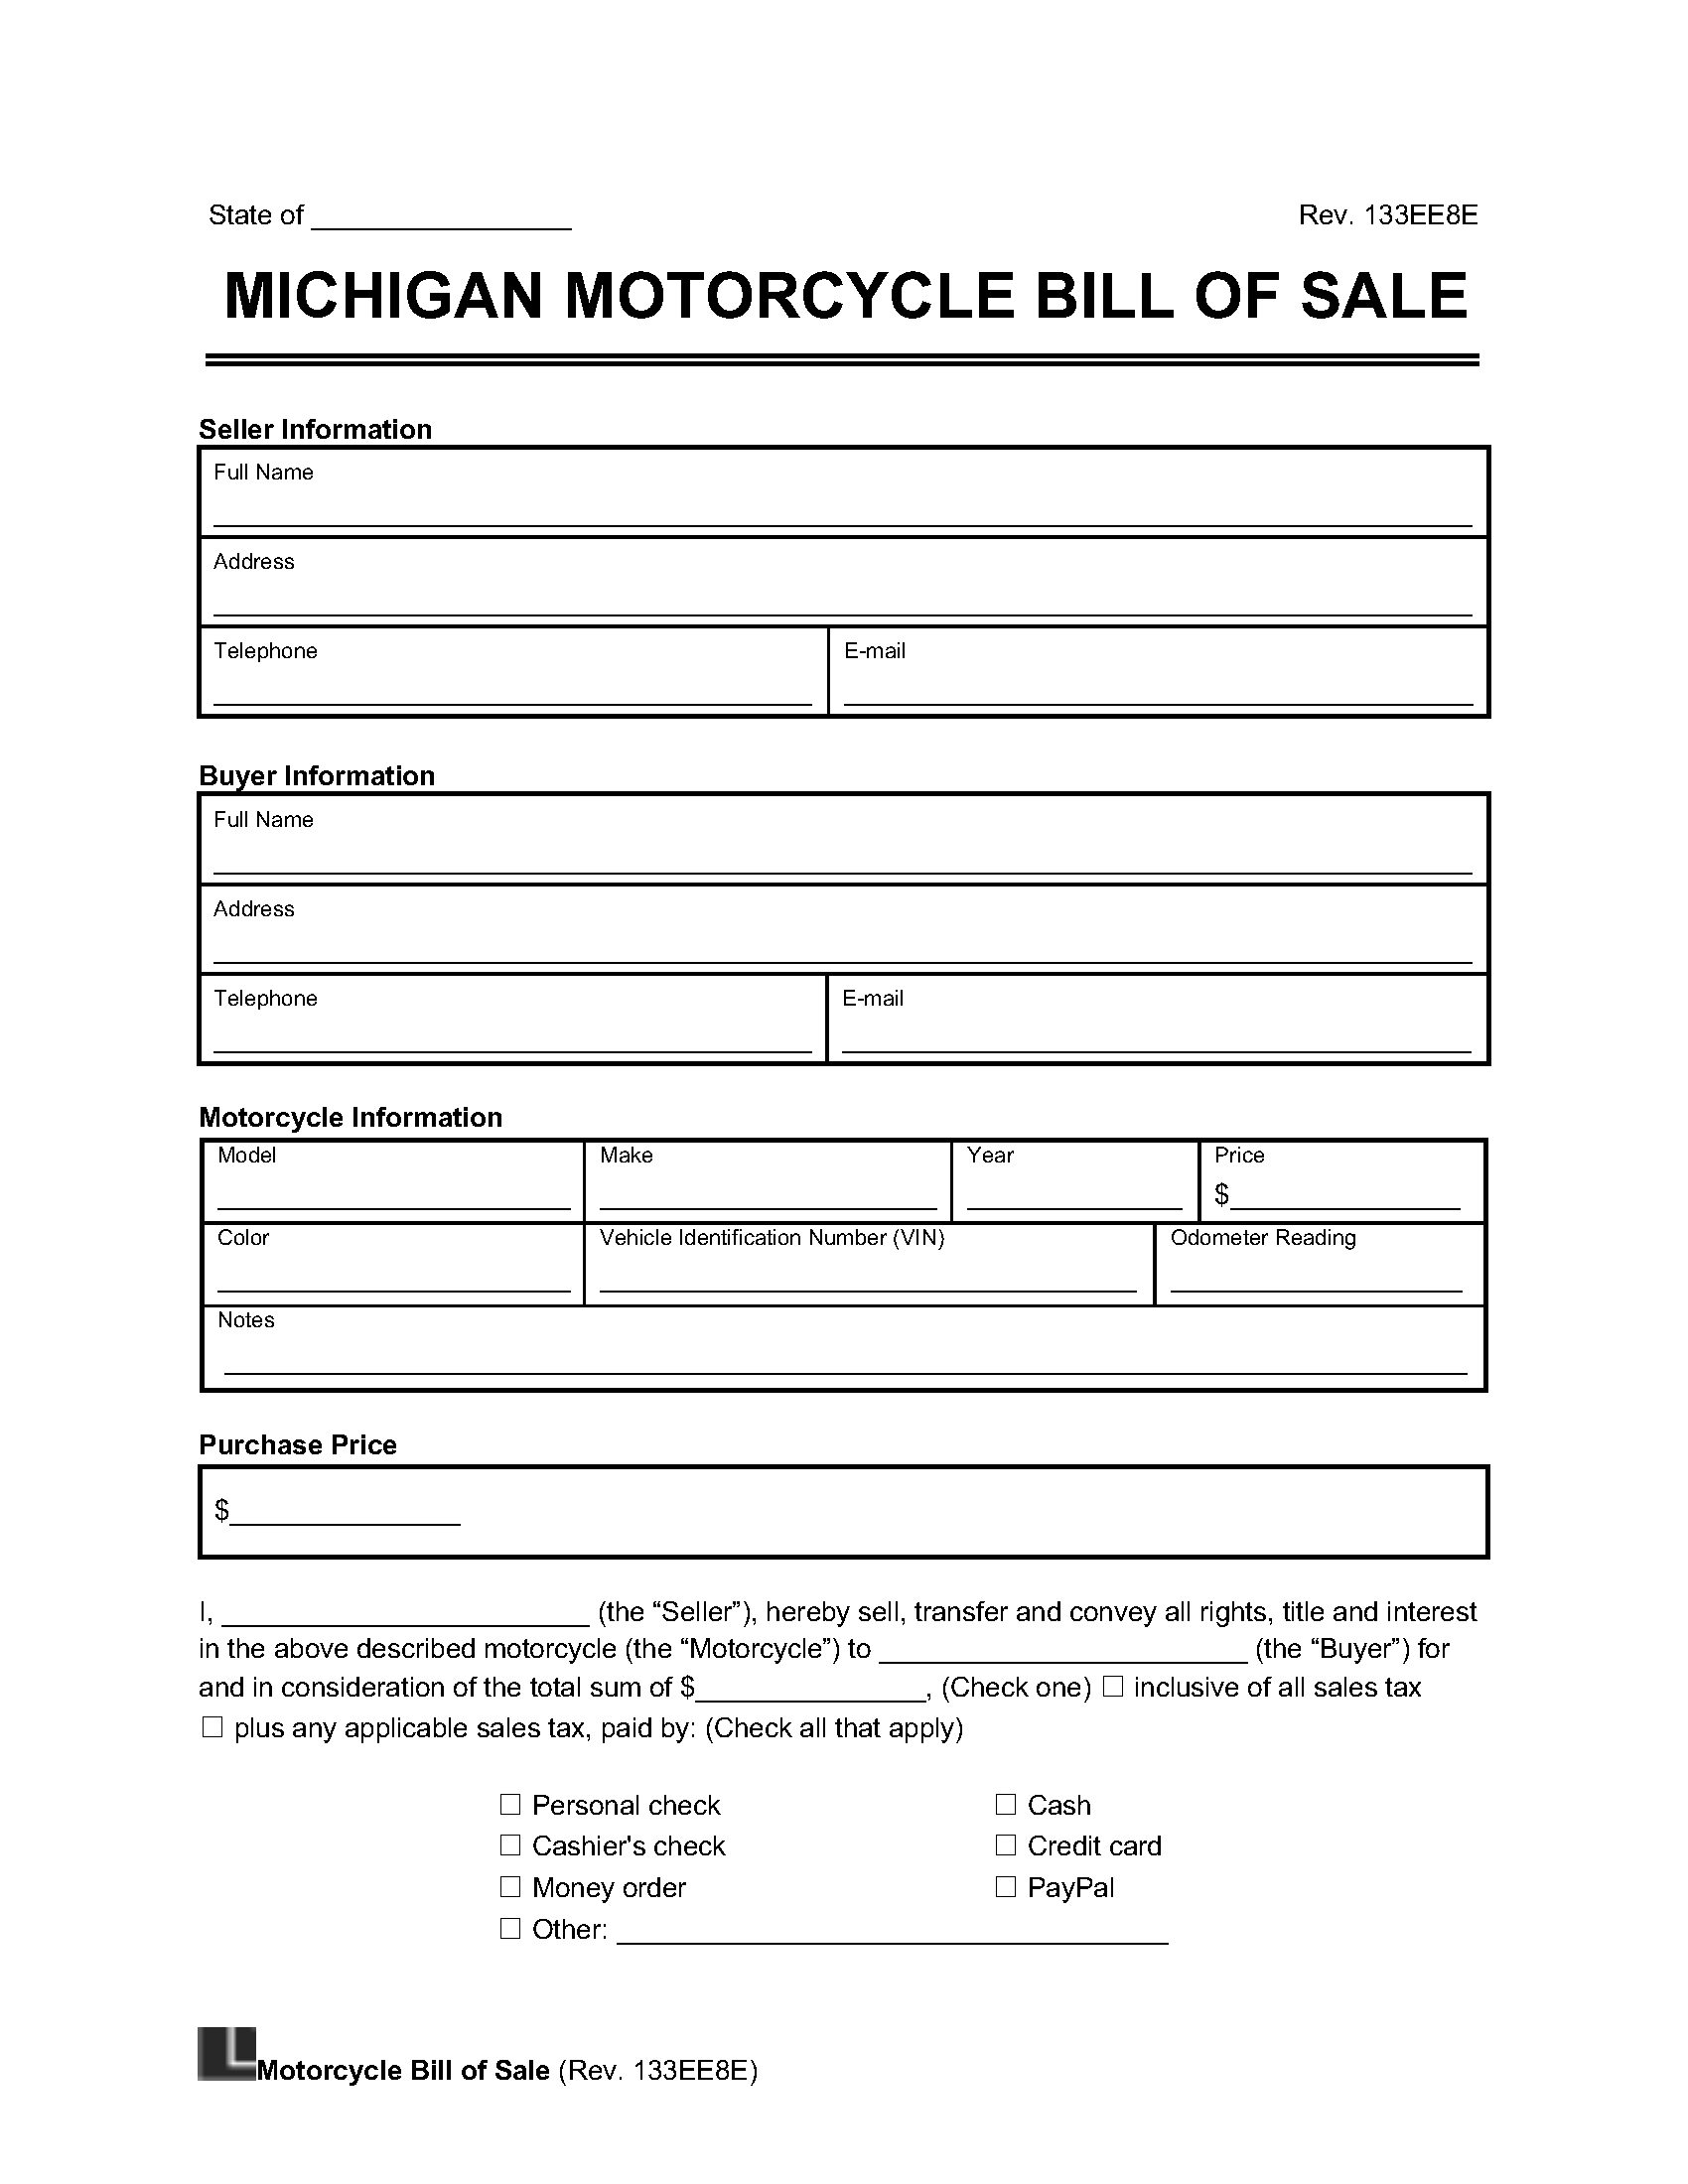 michigan motorcycle bill of sale